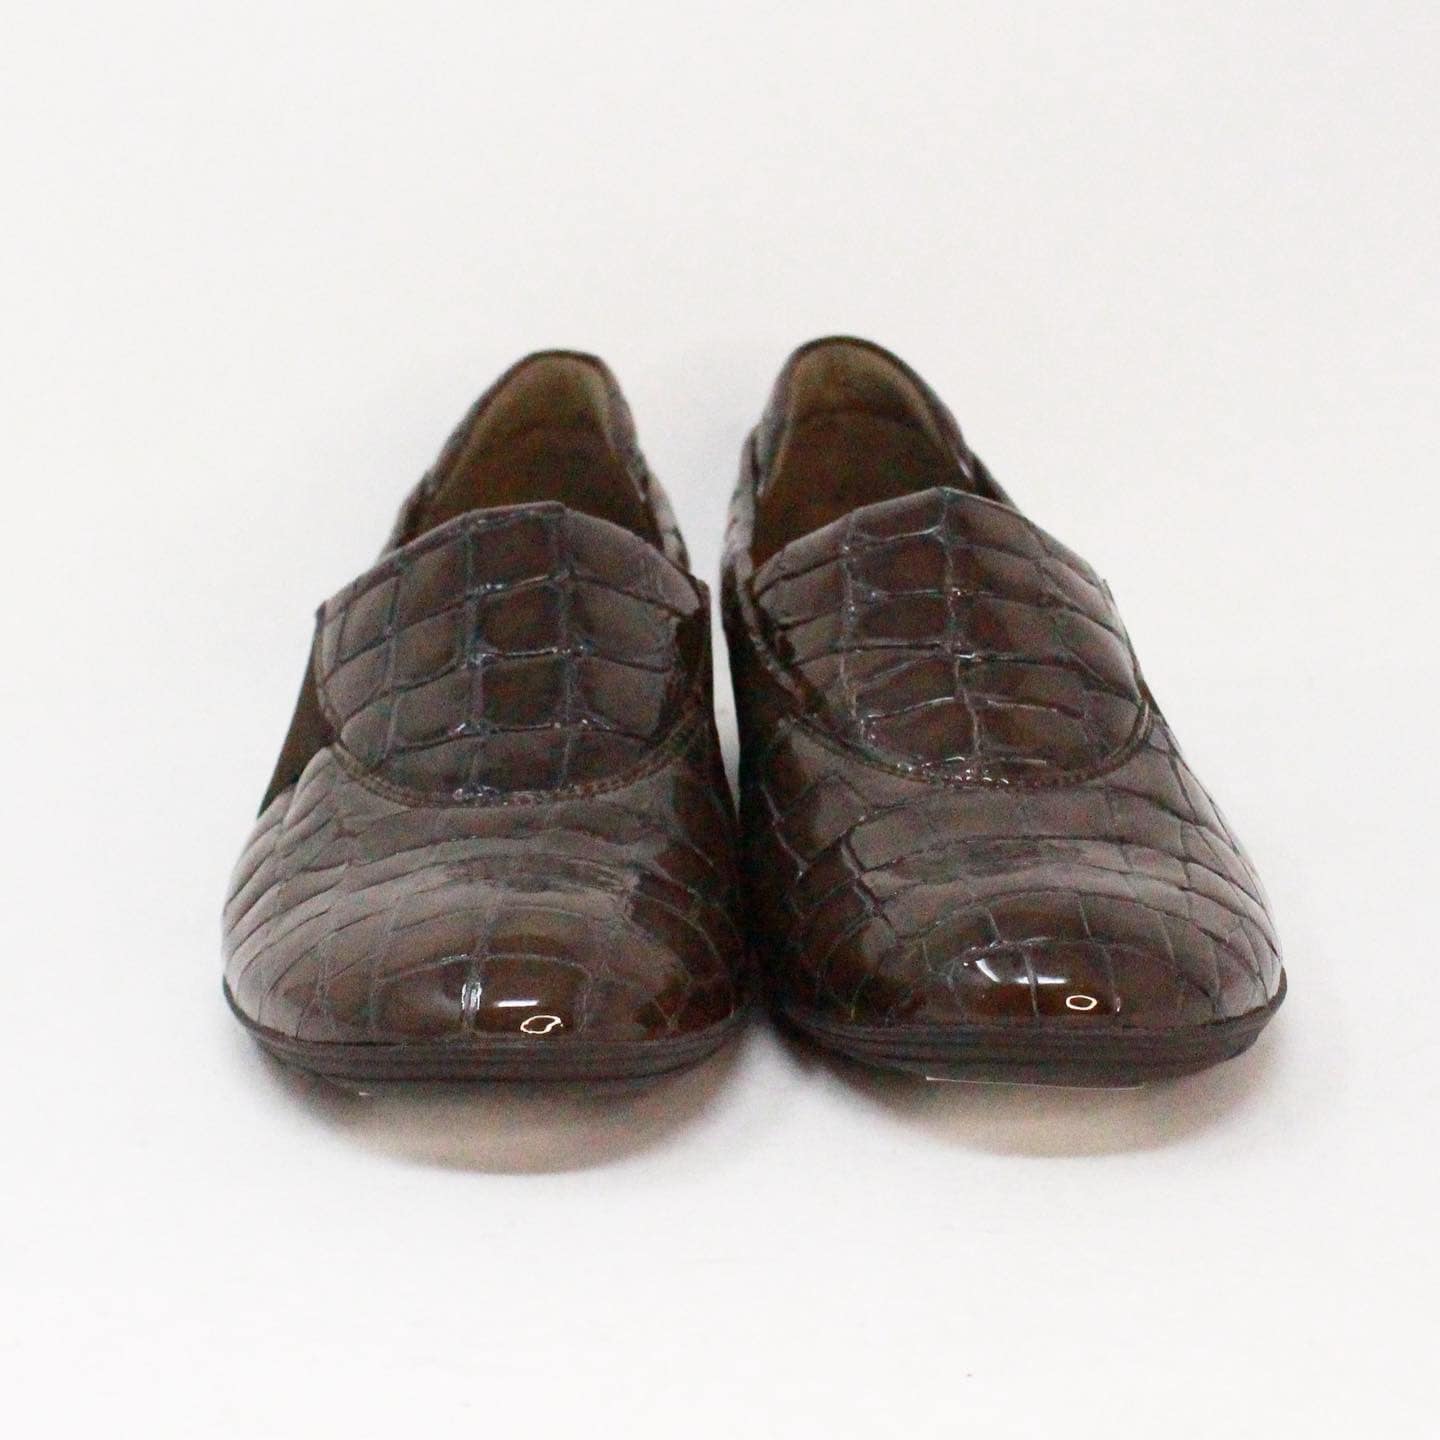 LOUIS VUITTON Mens Patent Leather Black Loafers Shoes Size 5 / 39 EUR